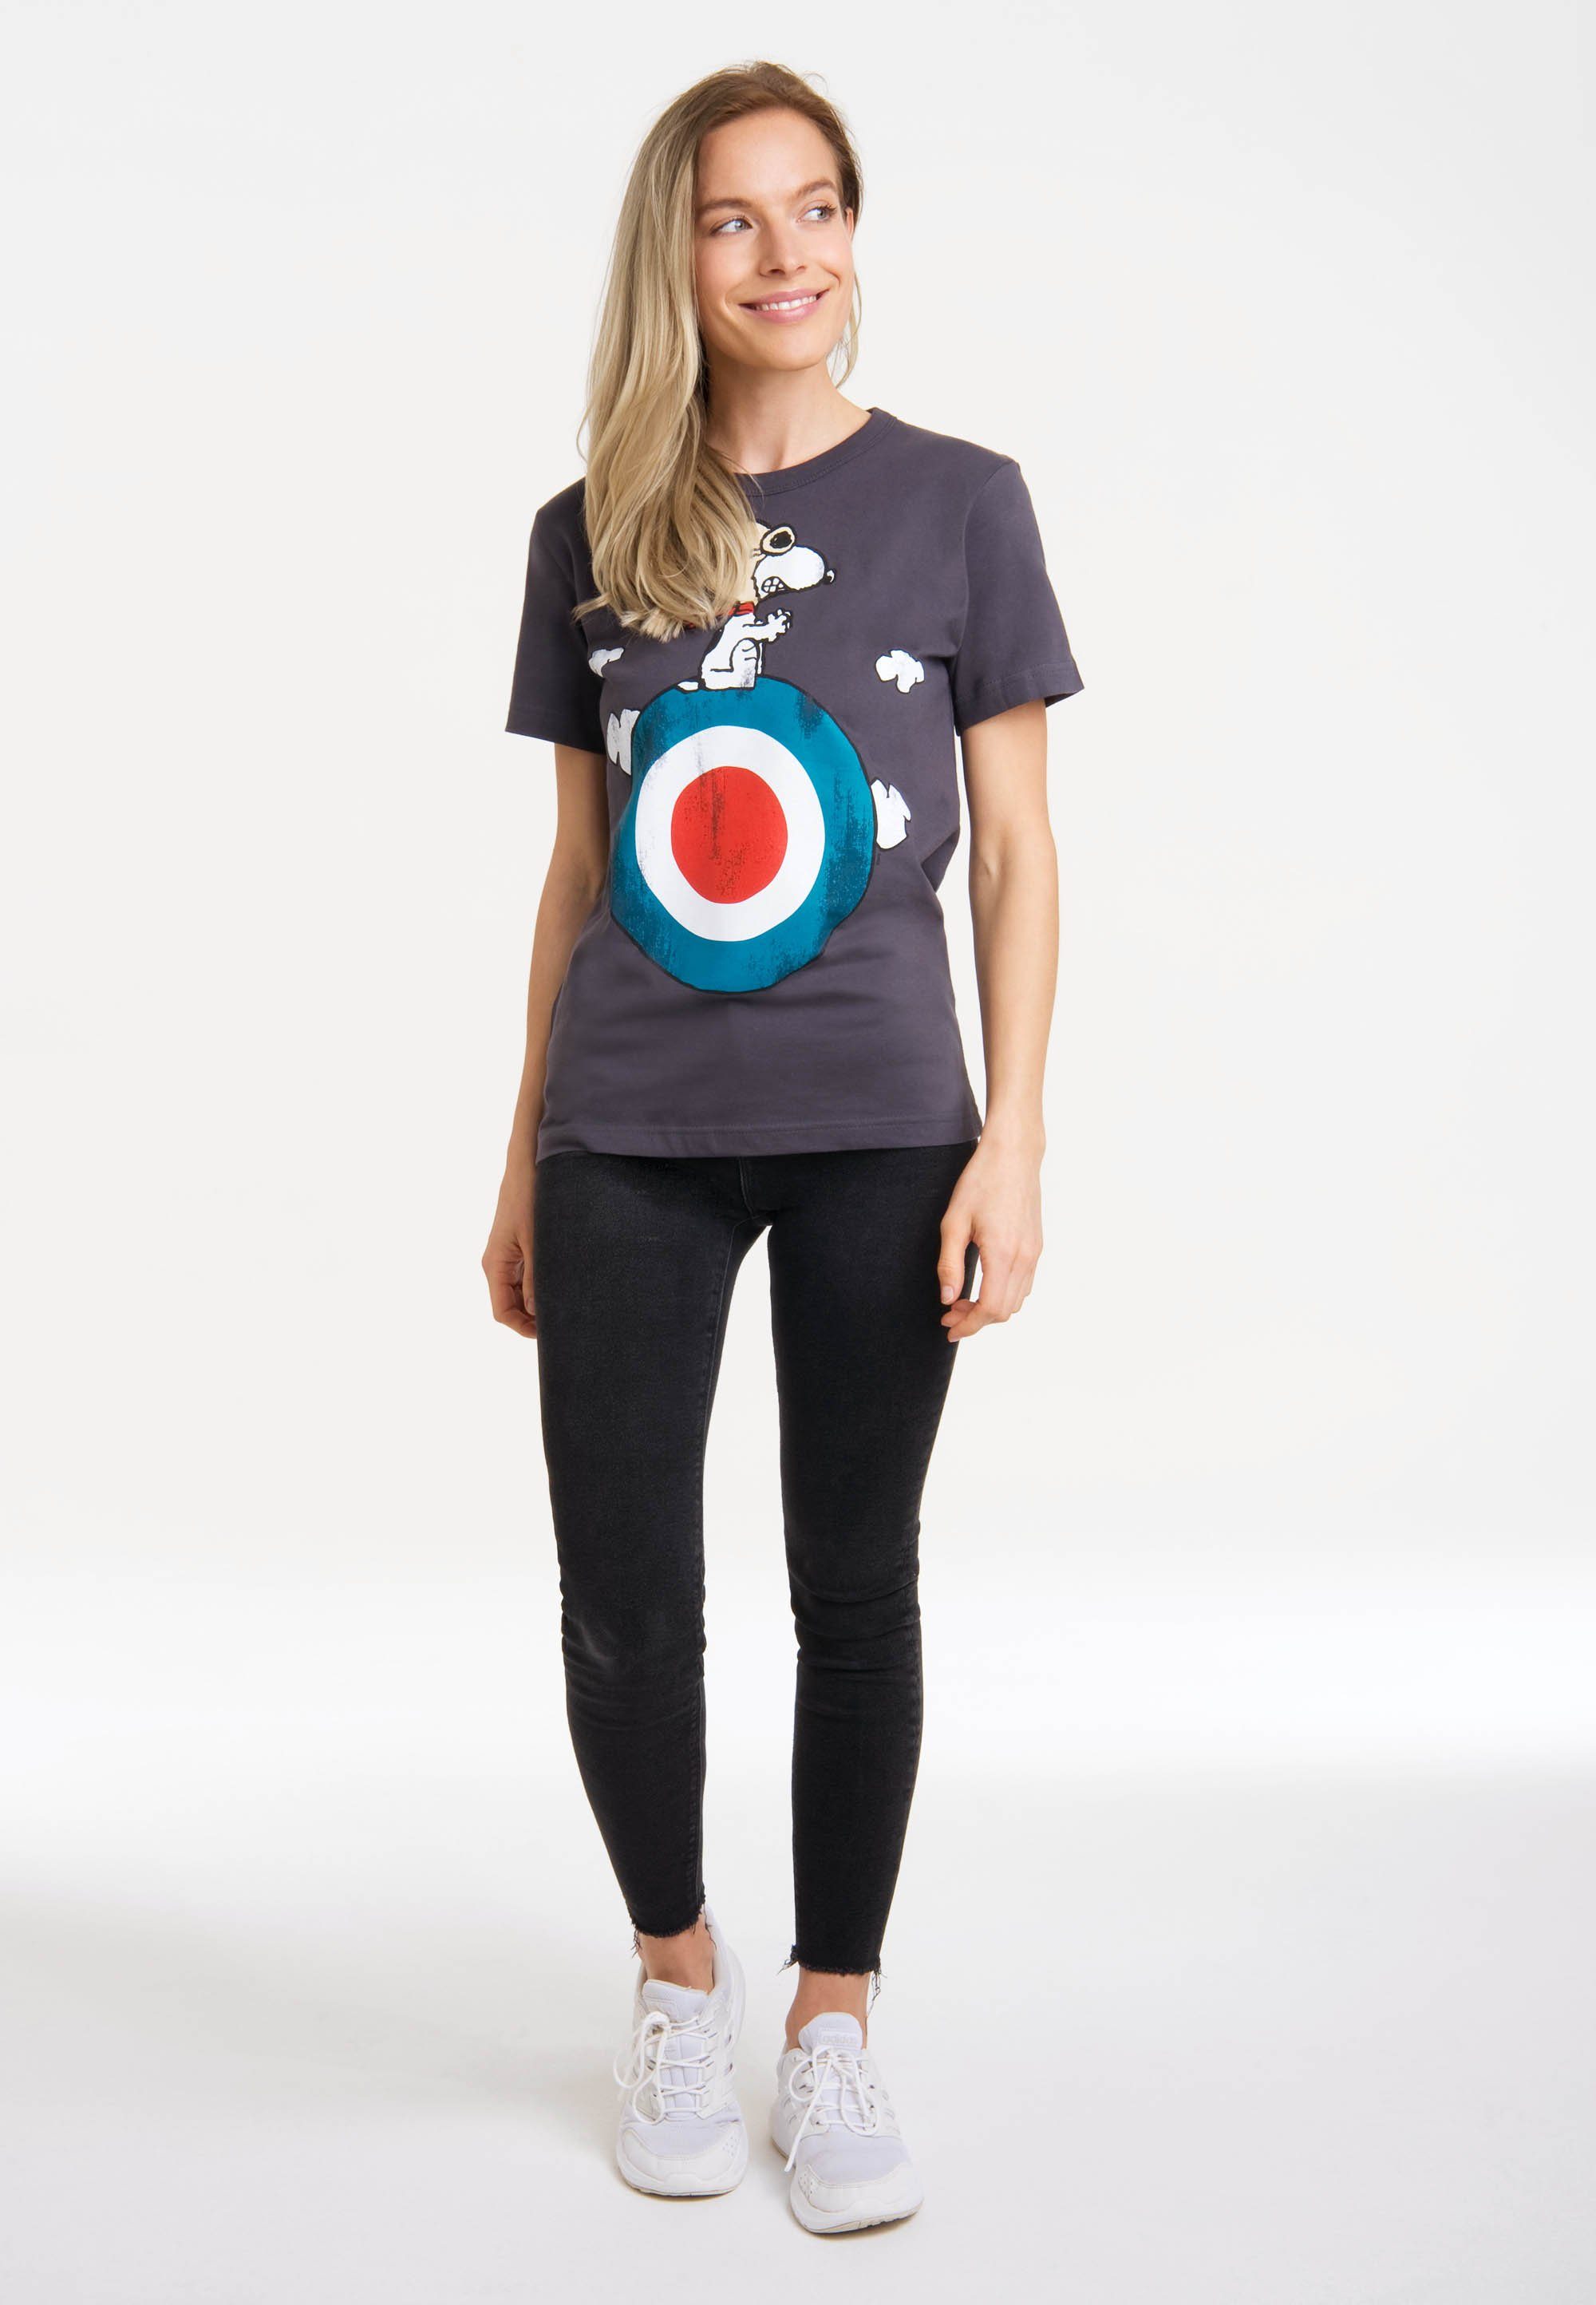 Print blau-grau LOGOSHIRT - Snoopy T-Shirt mit lizenziertem Peanuts